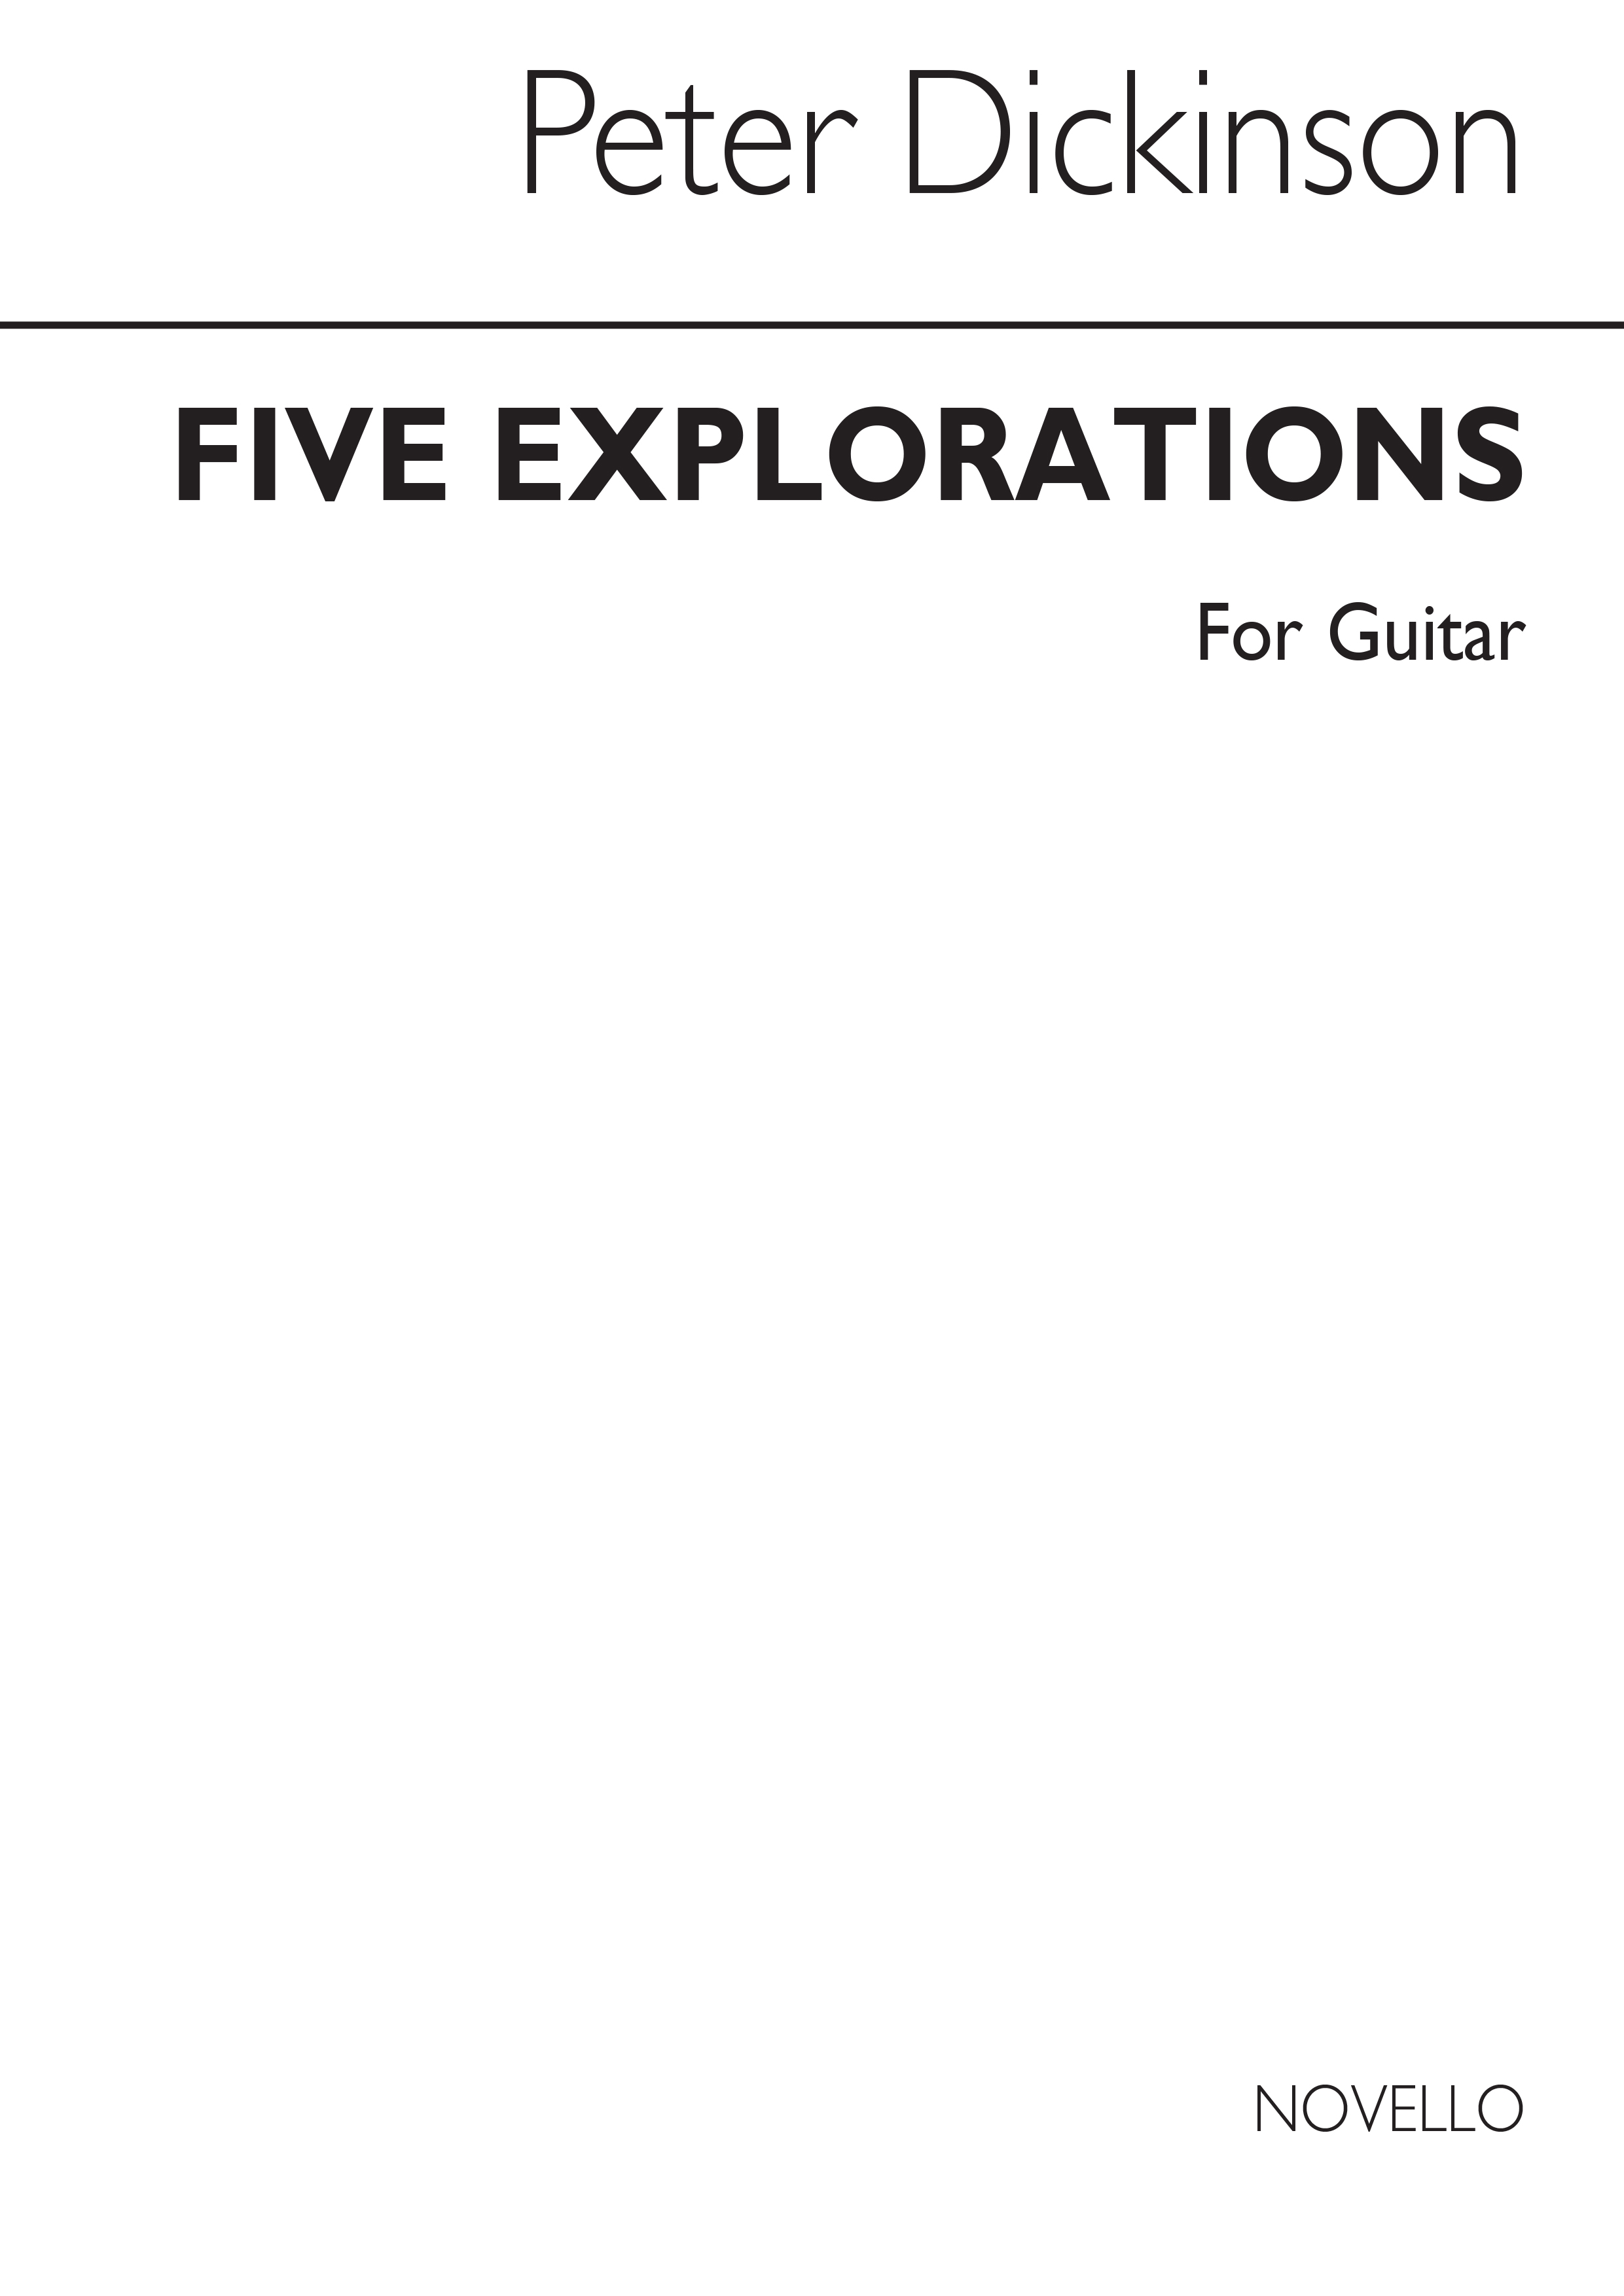 Peter Dickinson: Five Explorations